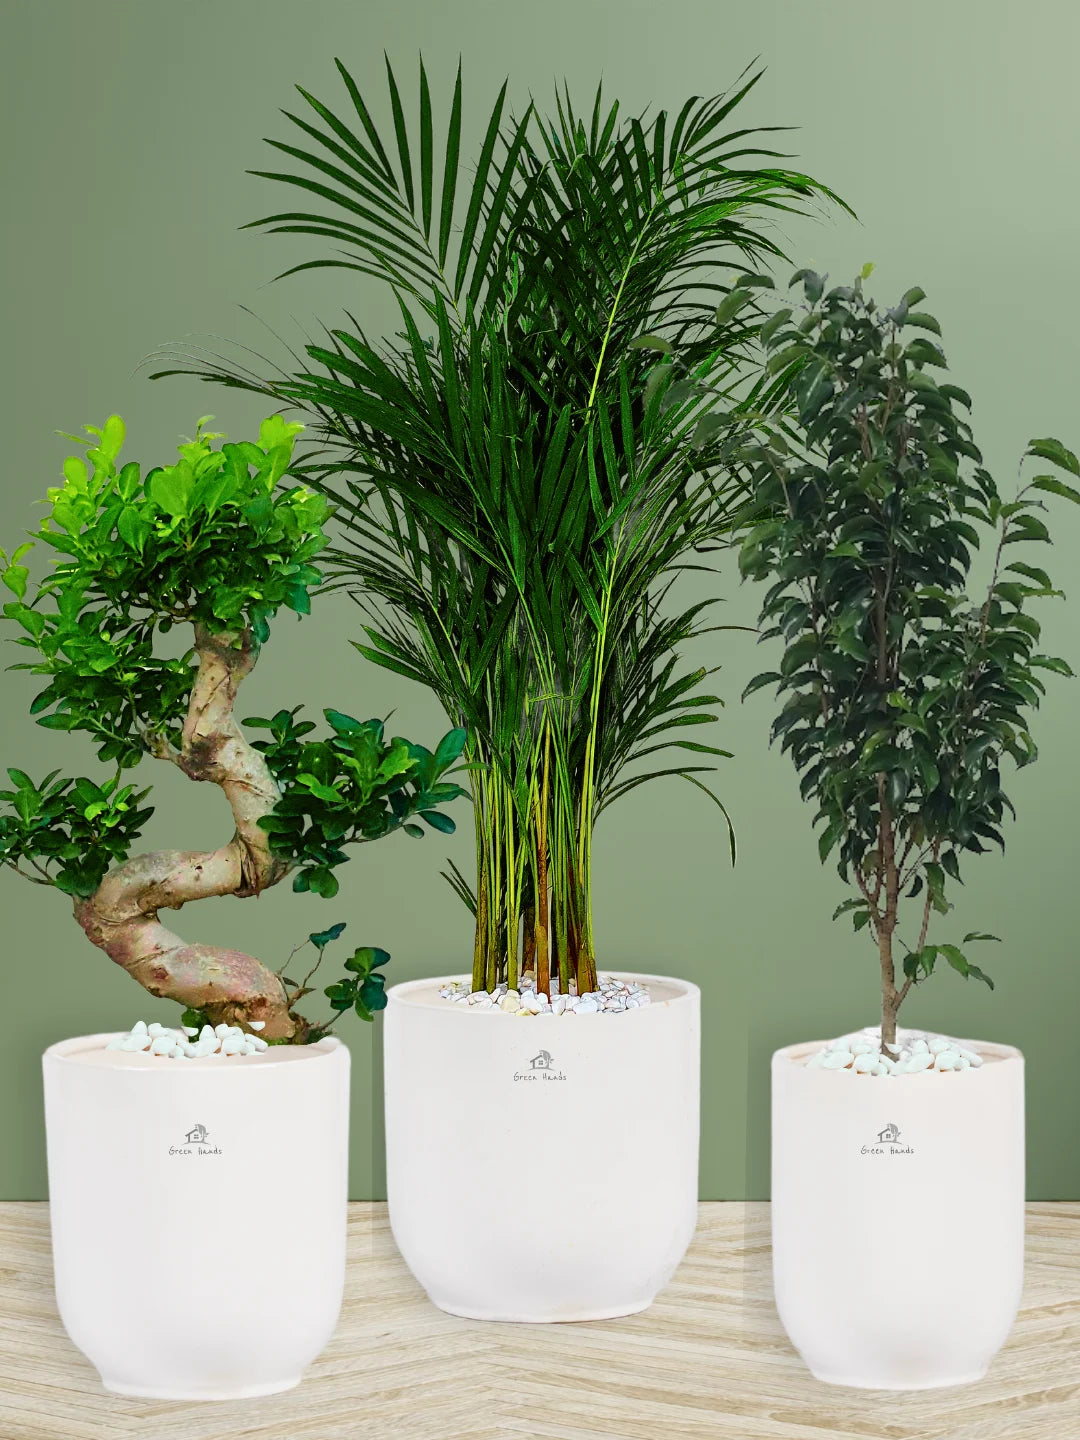 Areca Palm, Ficus Benjamina, S Bonsai Tree | Bundle in Matching Ceramic Pots